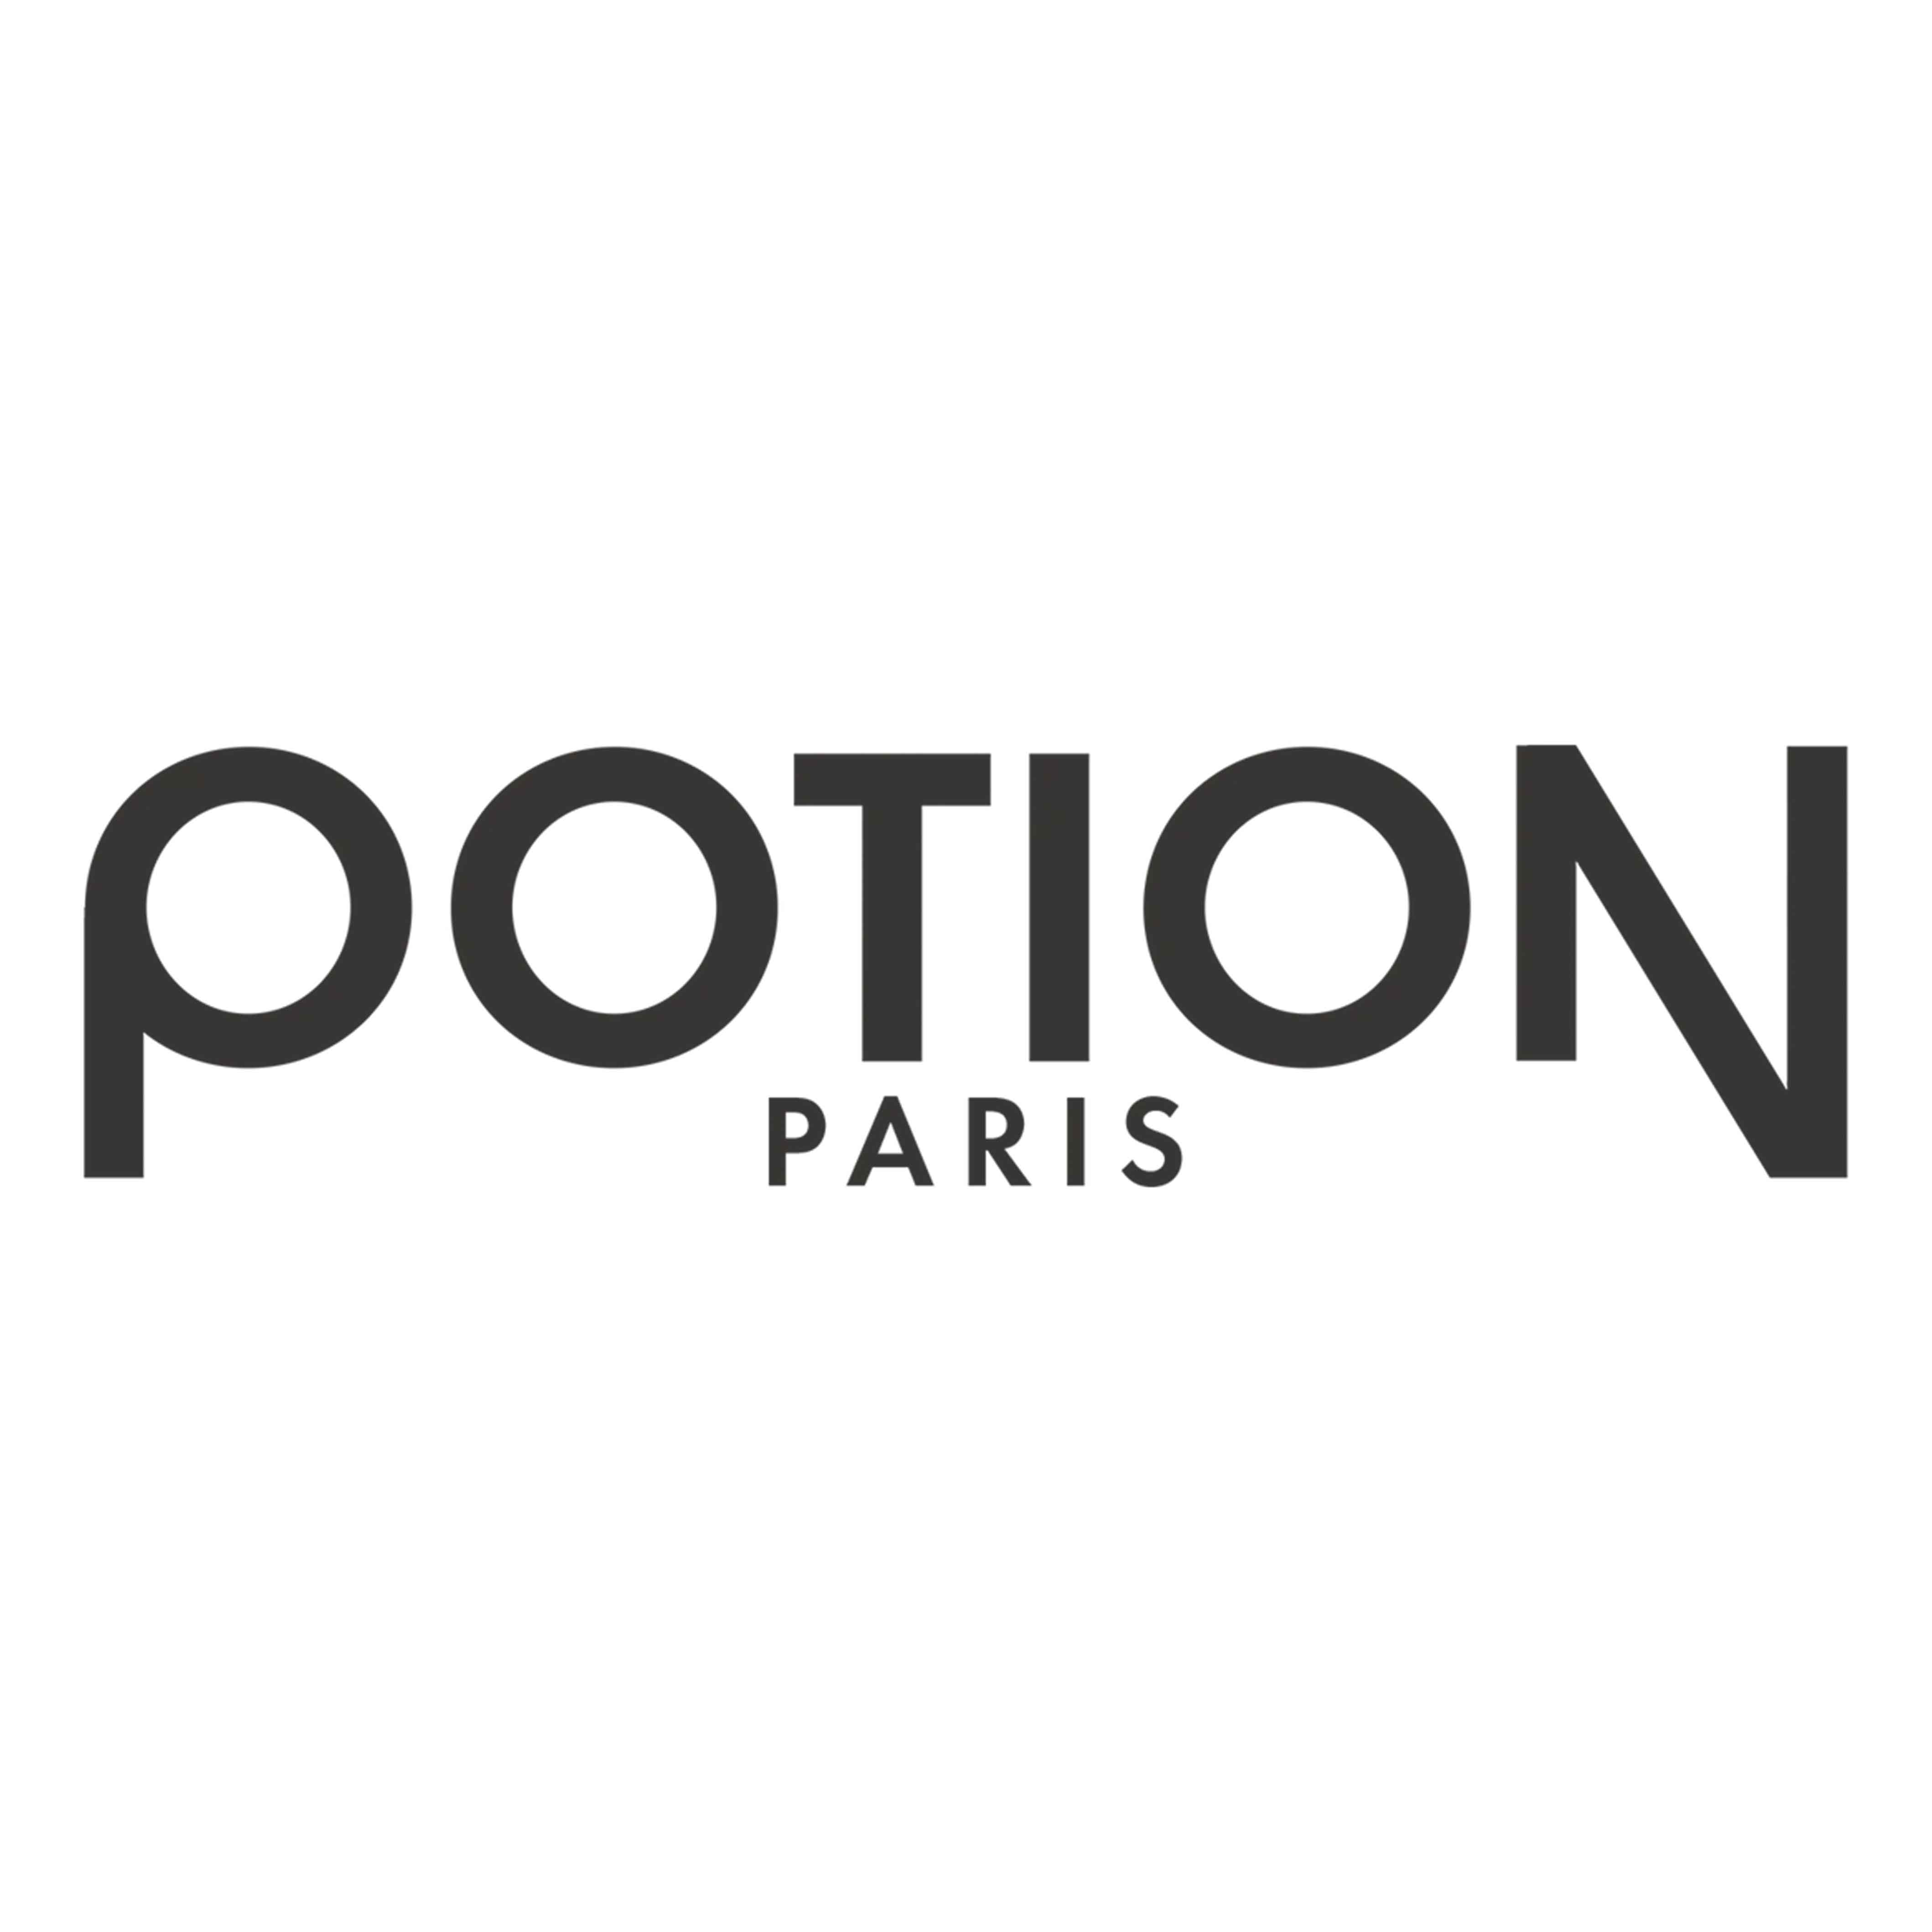 Potion Paris logo